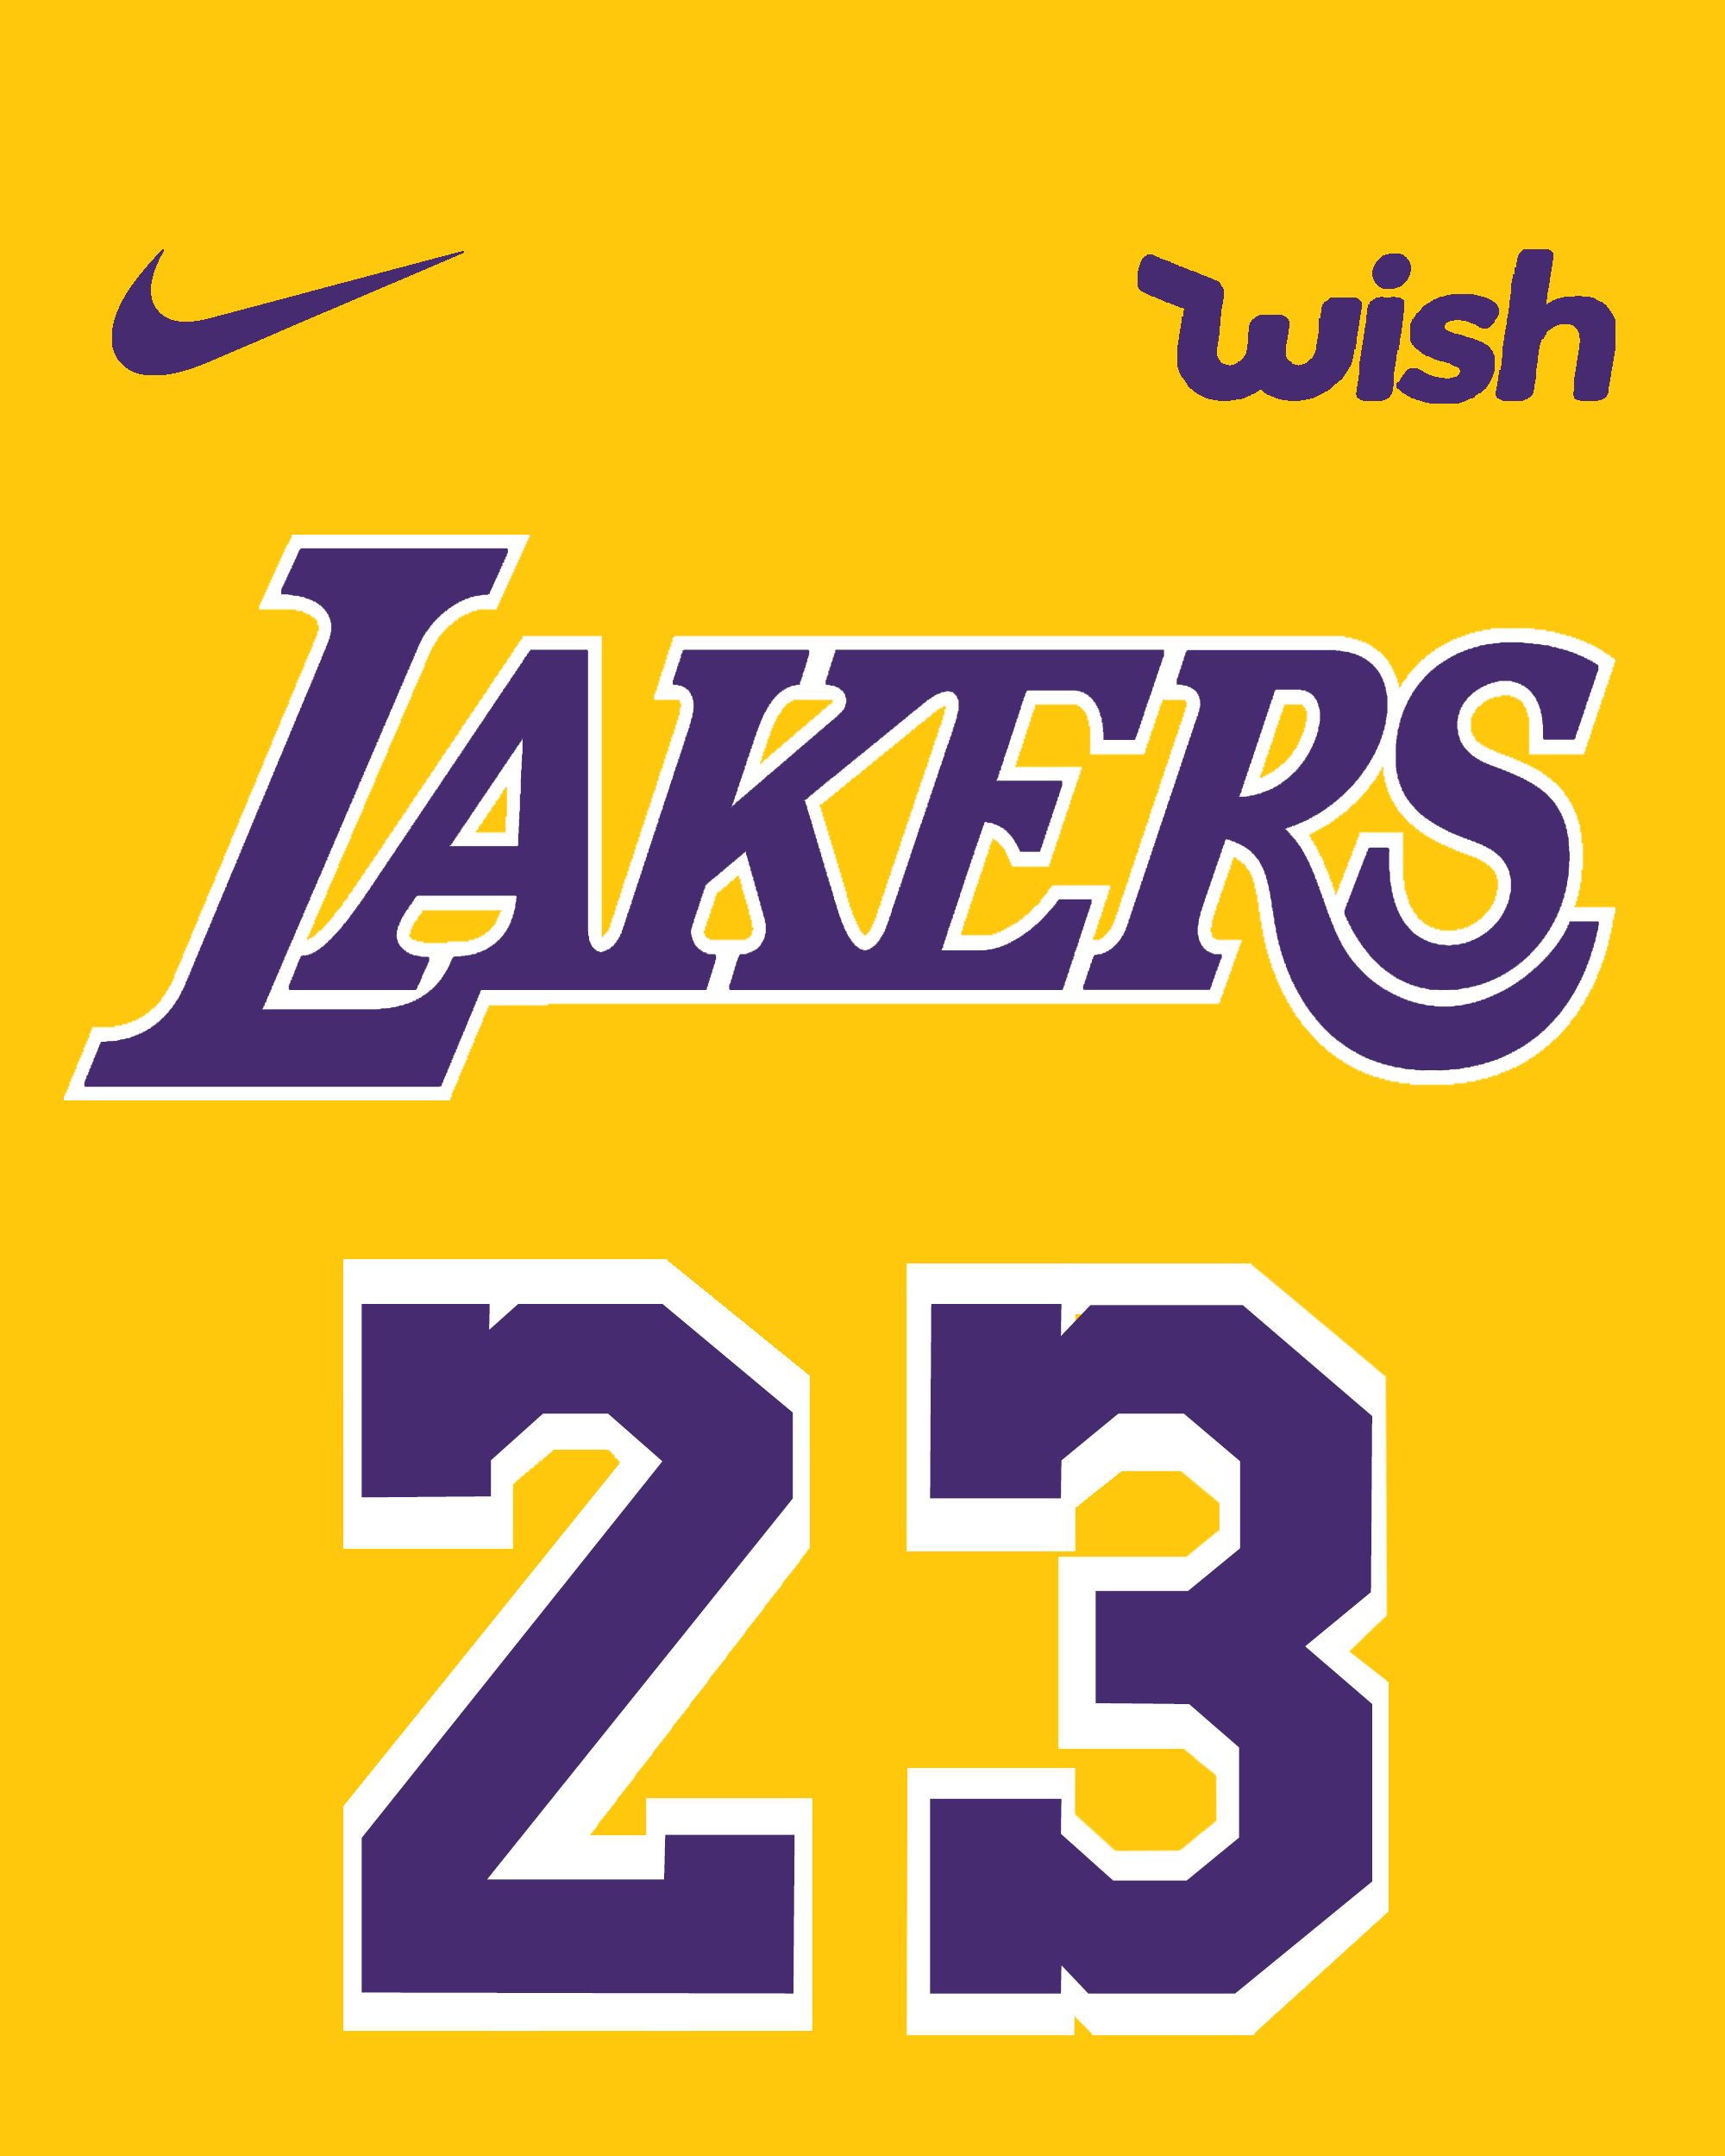 Lakers 23 Jersey Wallpaper. Fondos de deportes, Fotos de baloncesto, Bici fixie